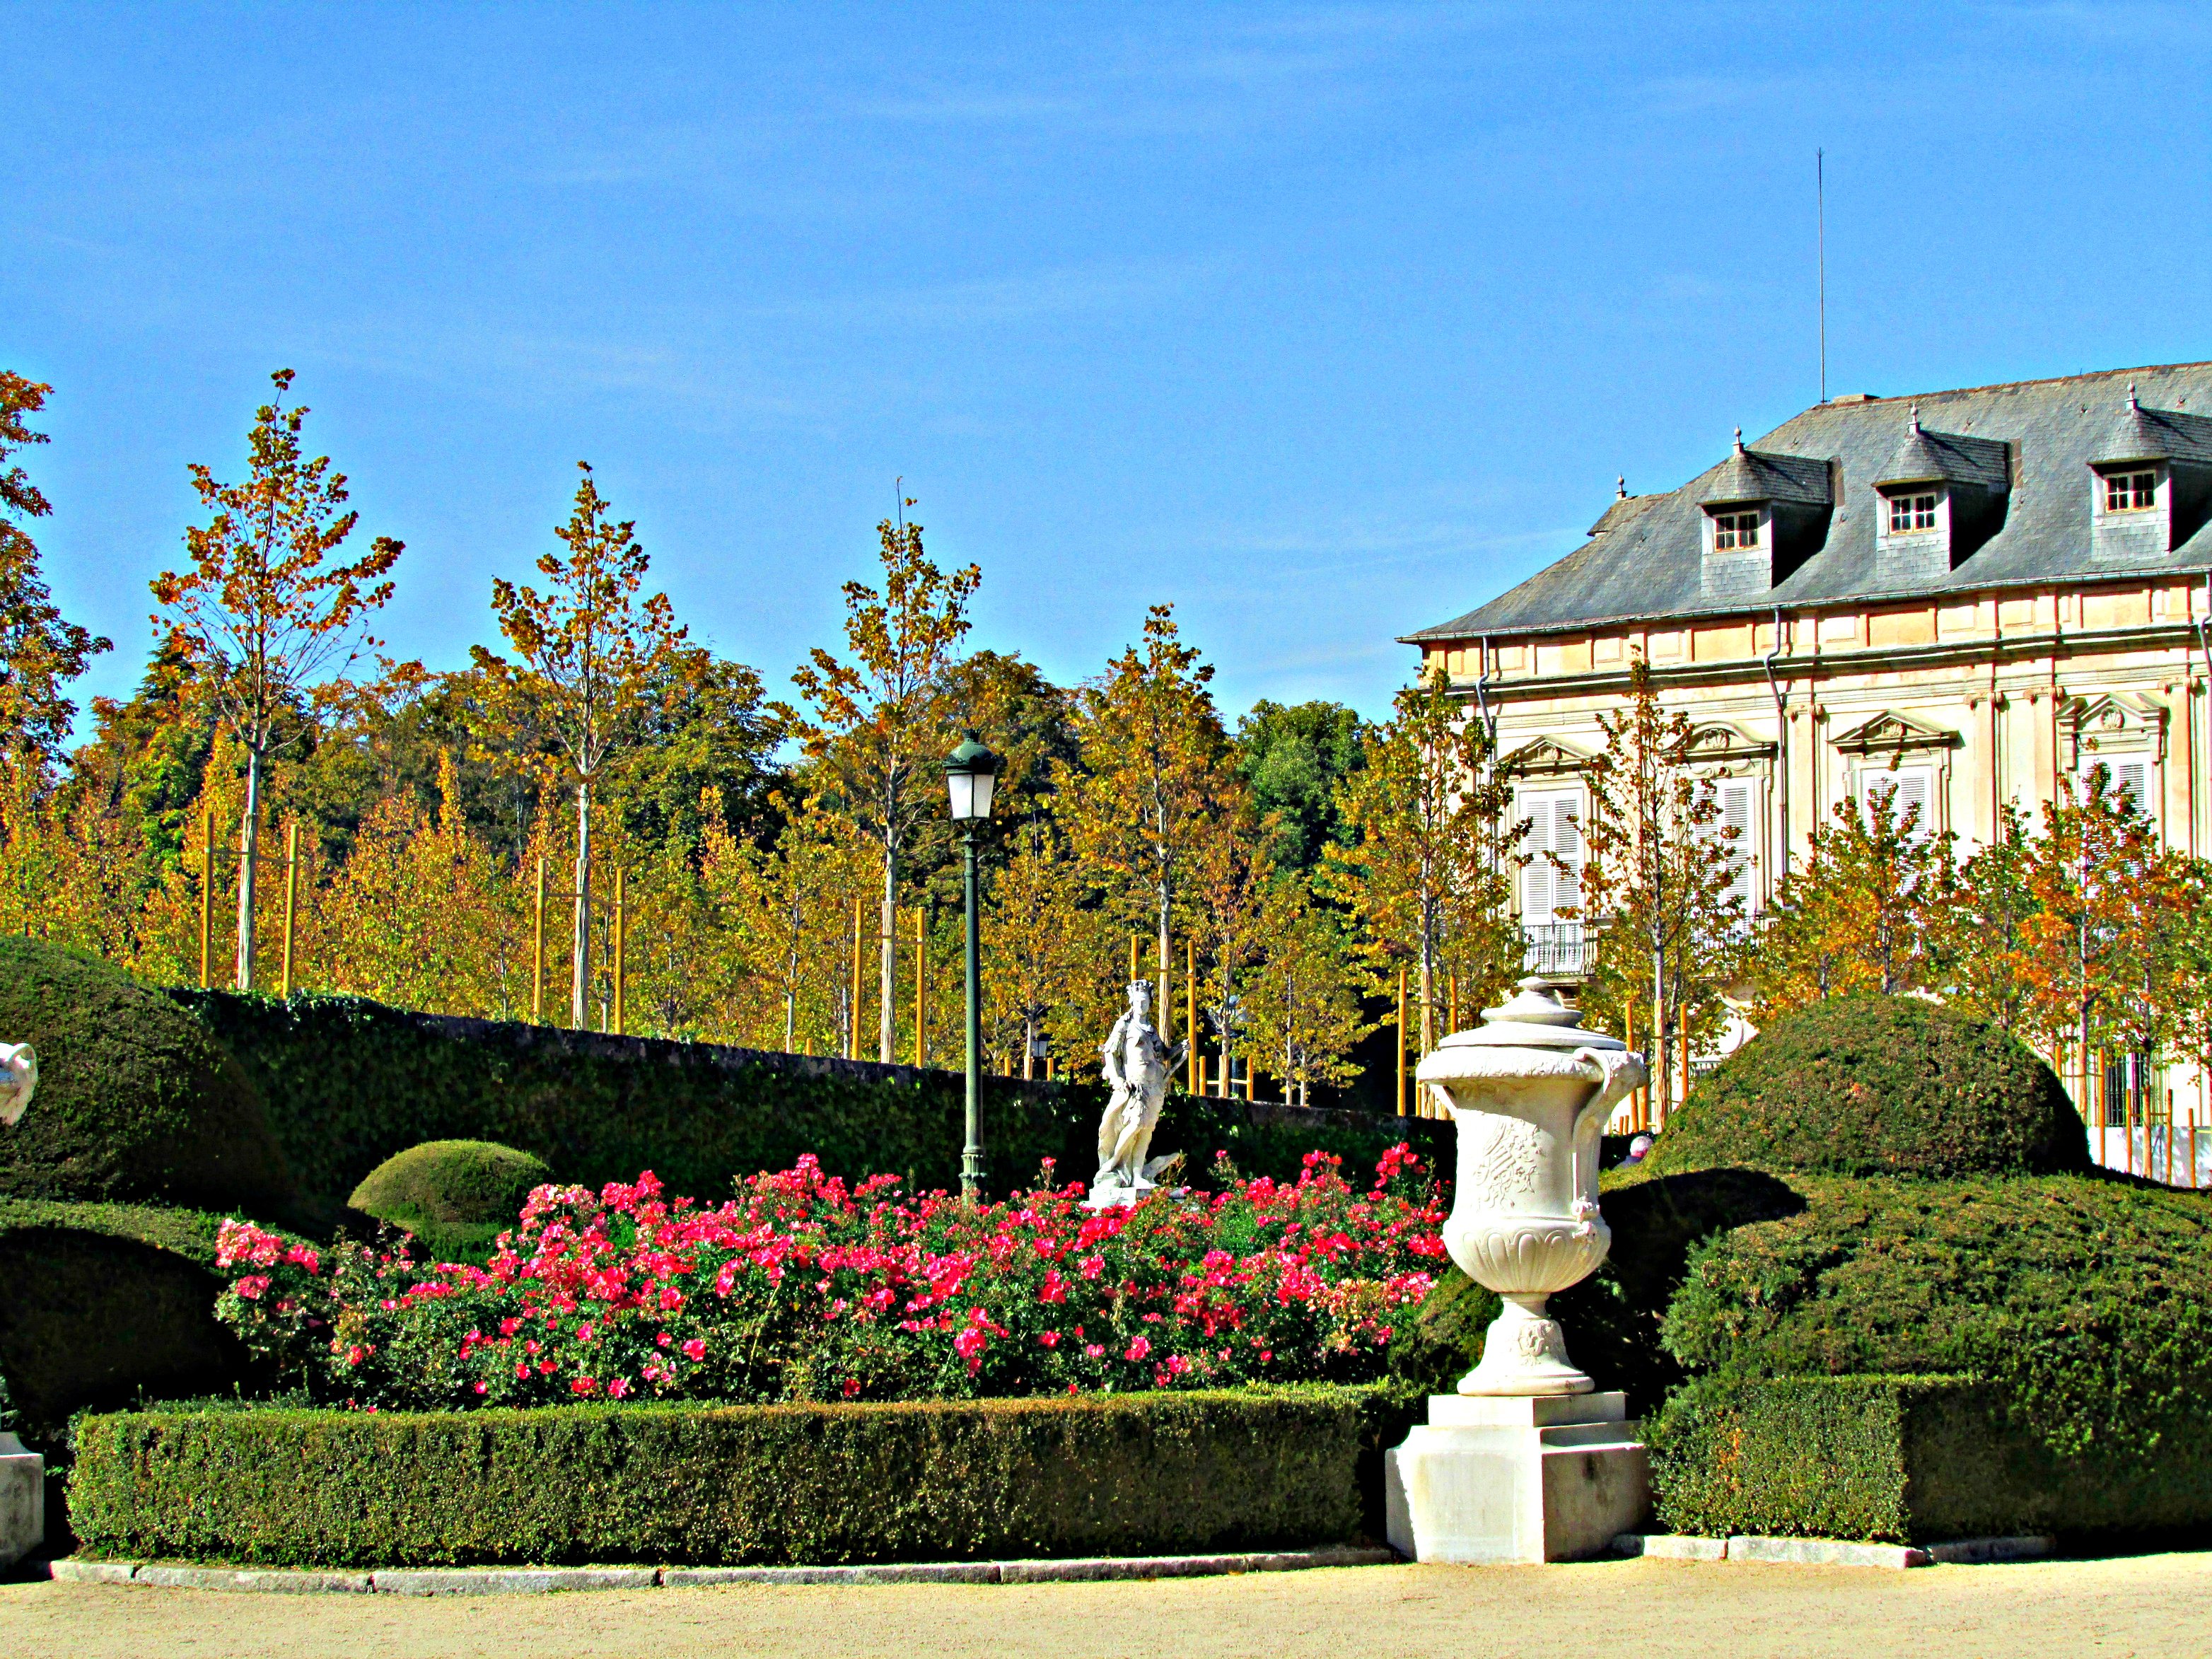 Palace of La Granja flower beds